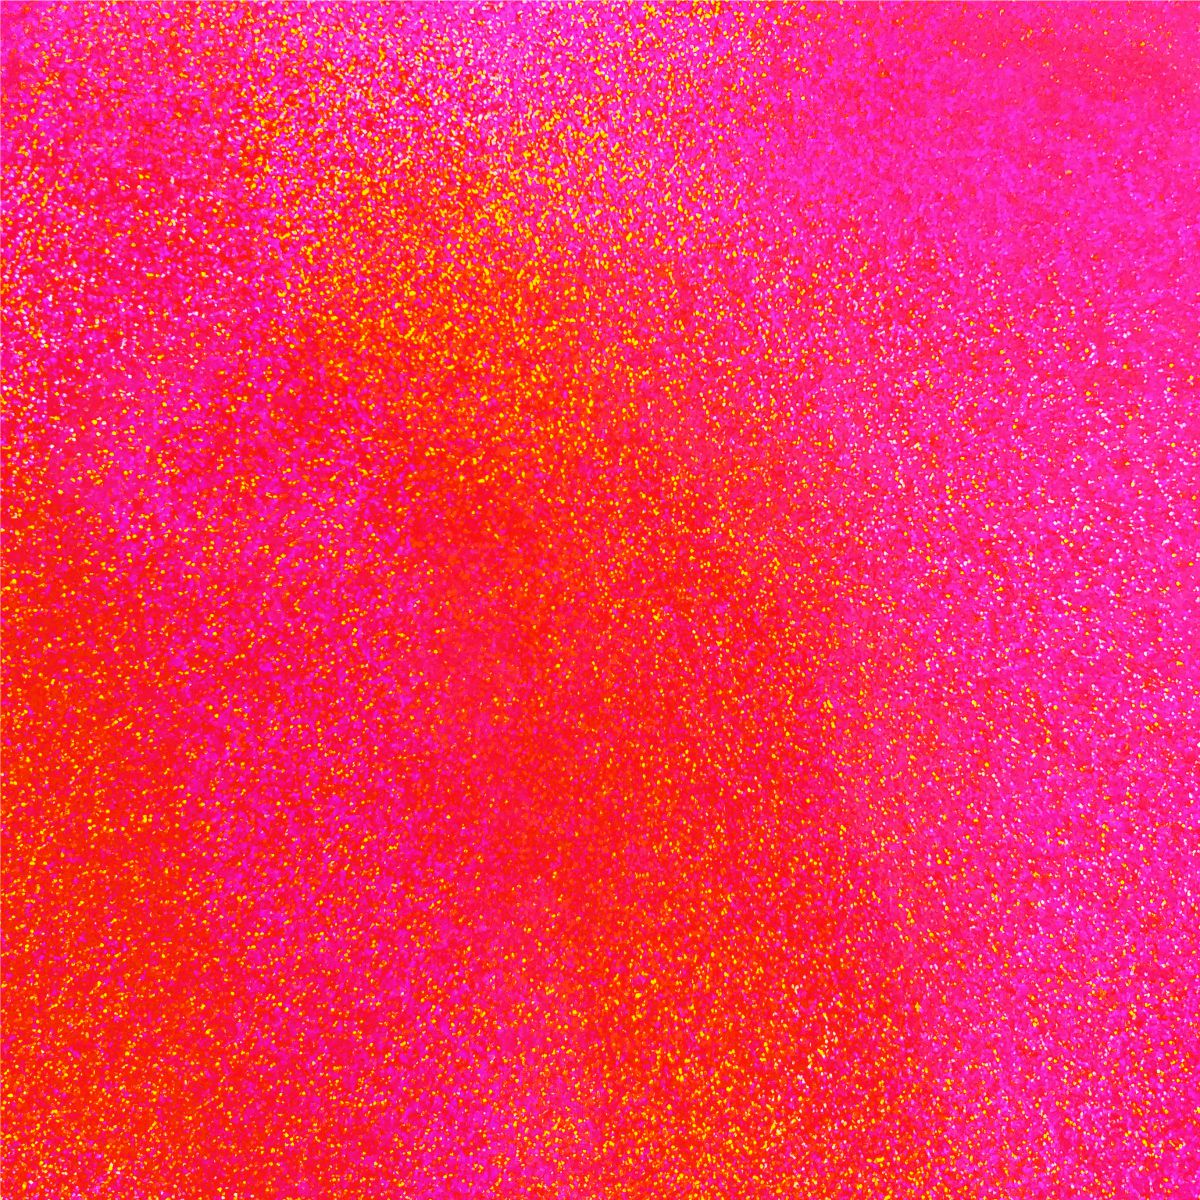 Holo Glitter Fl. Pink Adhesive Vinyl Choose Your Length